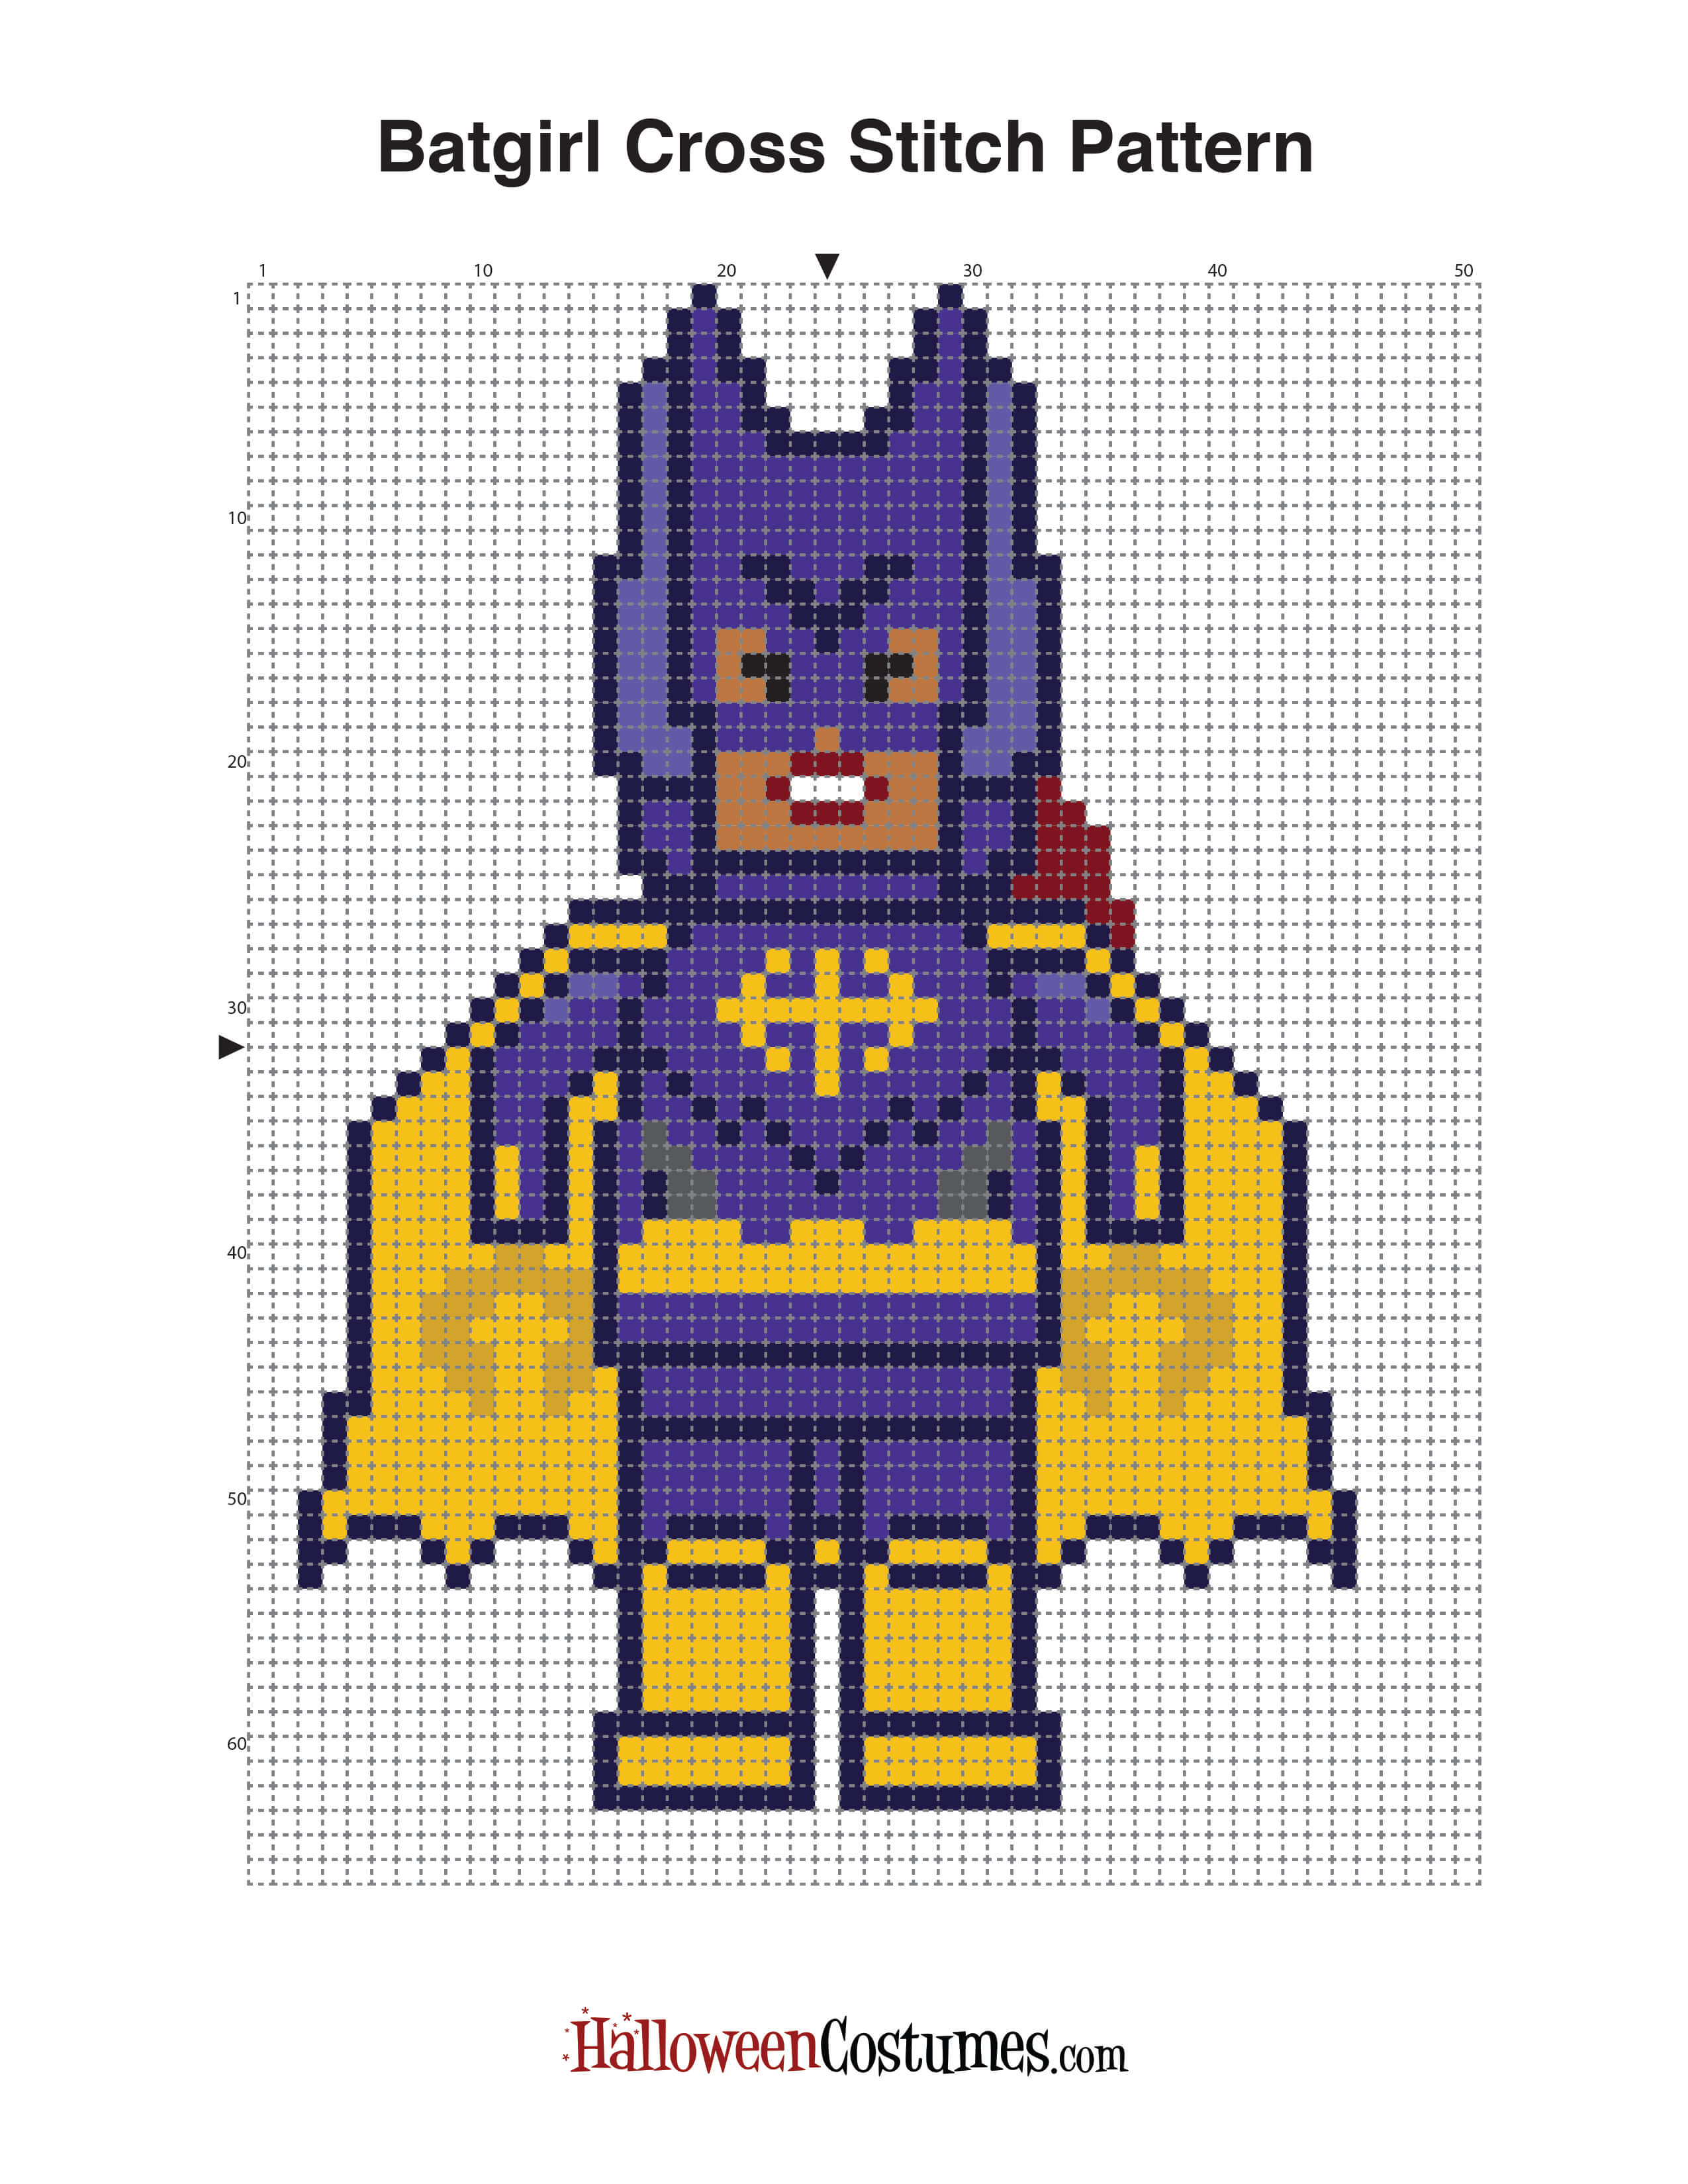 Batgirl Cross Stitch Pattern